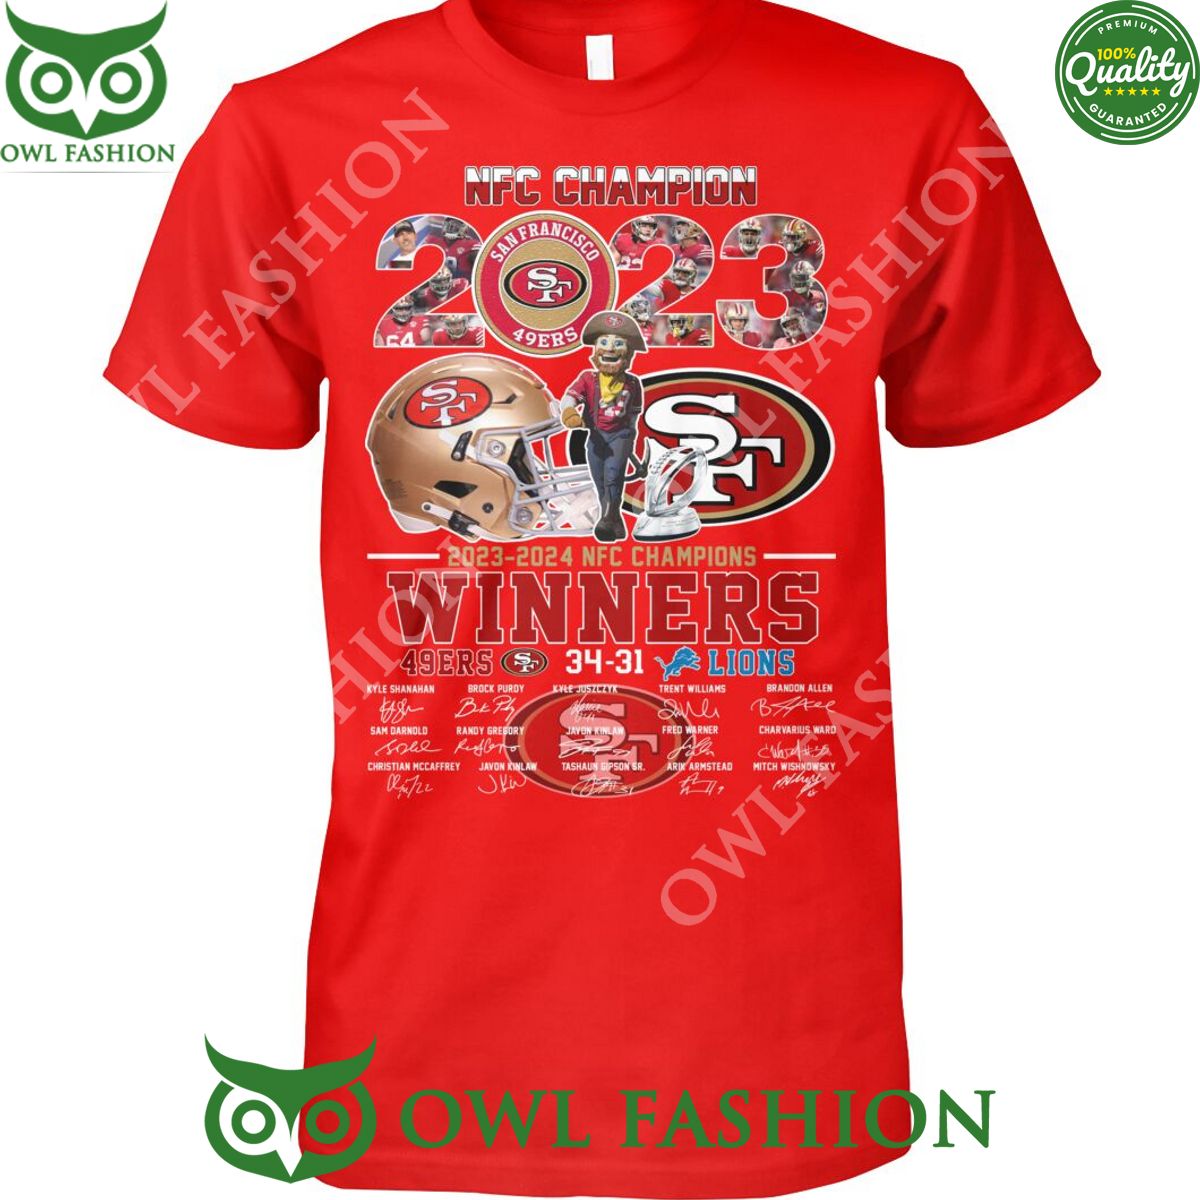 NFC Champions 2023 2024 49ers vs Lions 34 31 Winners t shirt Looking so nice